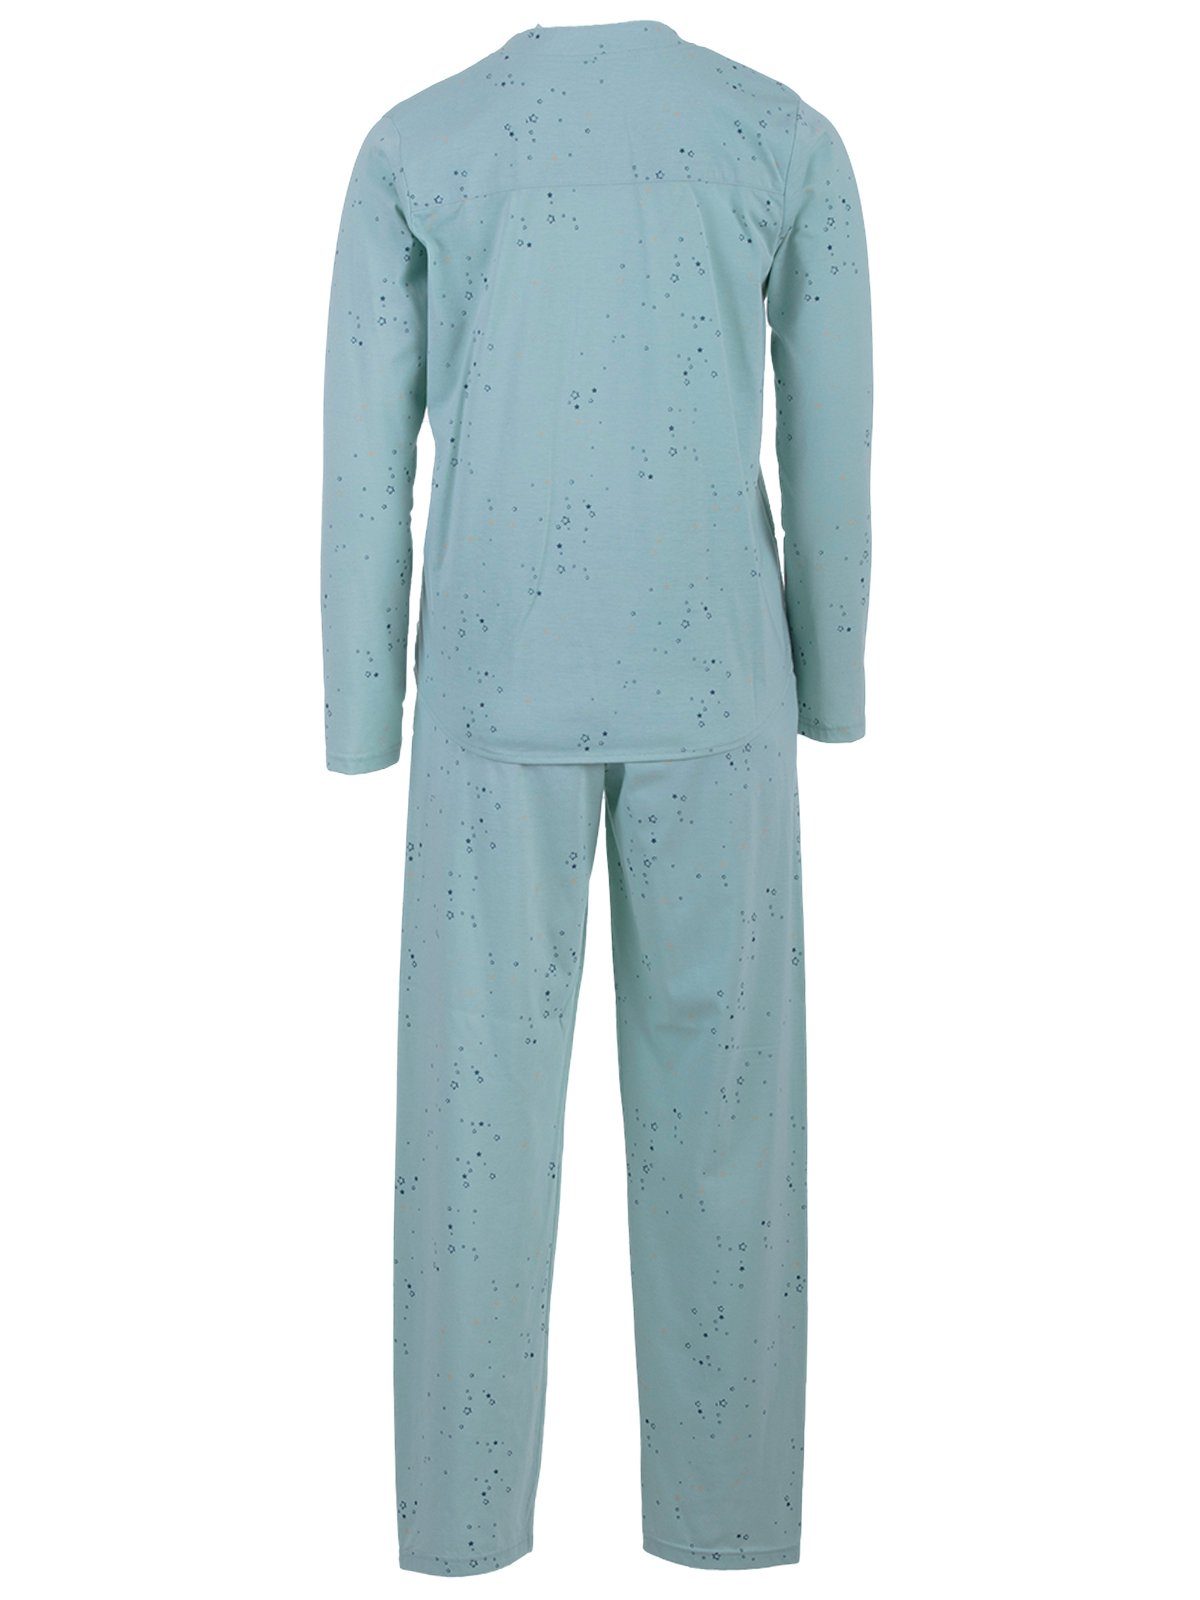 Sterne - Langarm Set Schlafanzug Pyjama zeitlos mint